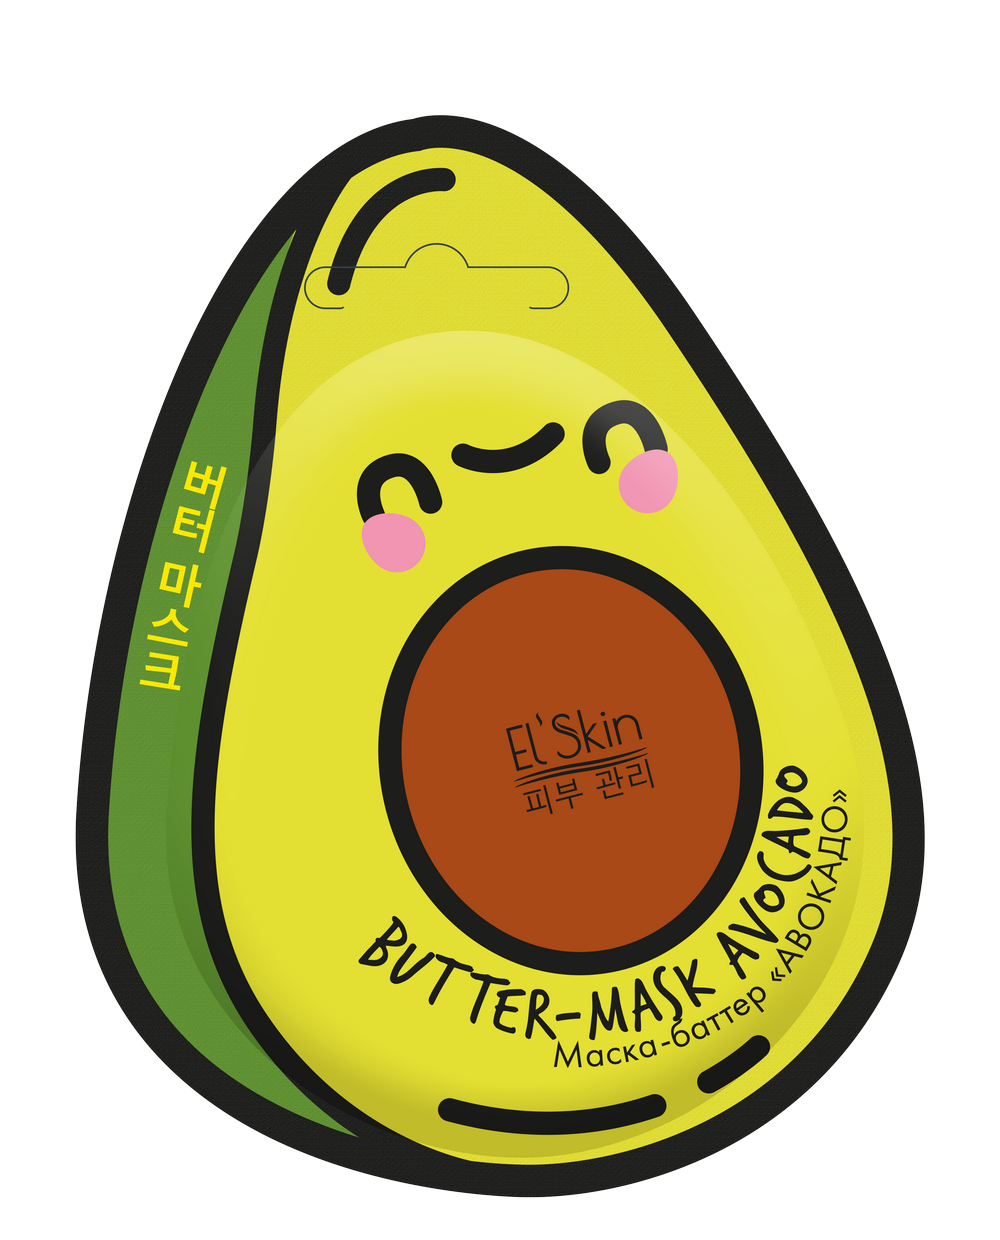 976 El`Skin Butter-MASK avocado Маска-баттер «АВОКАДО»